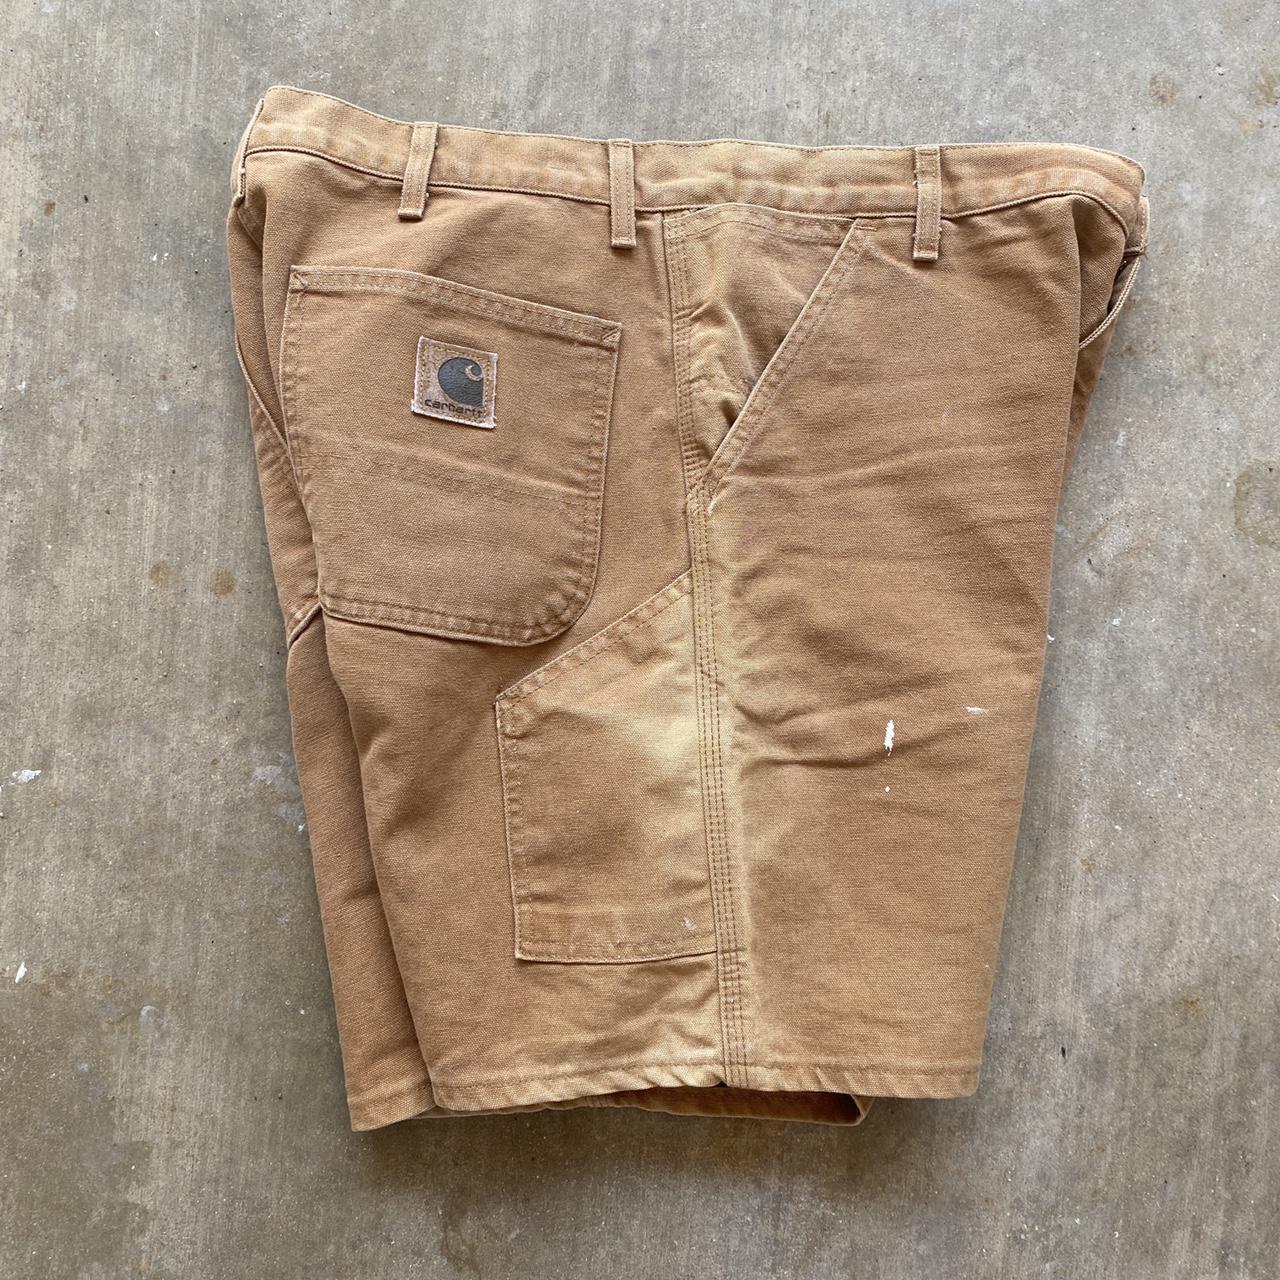 Vintage Carhartt shorts. Really nice distressed... - Depop